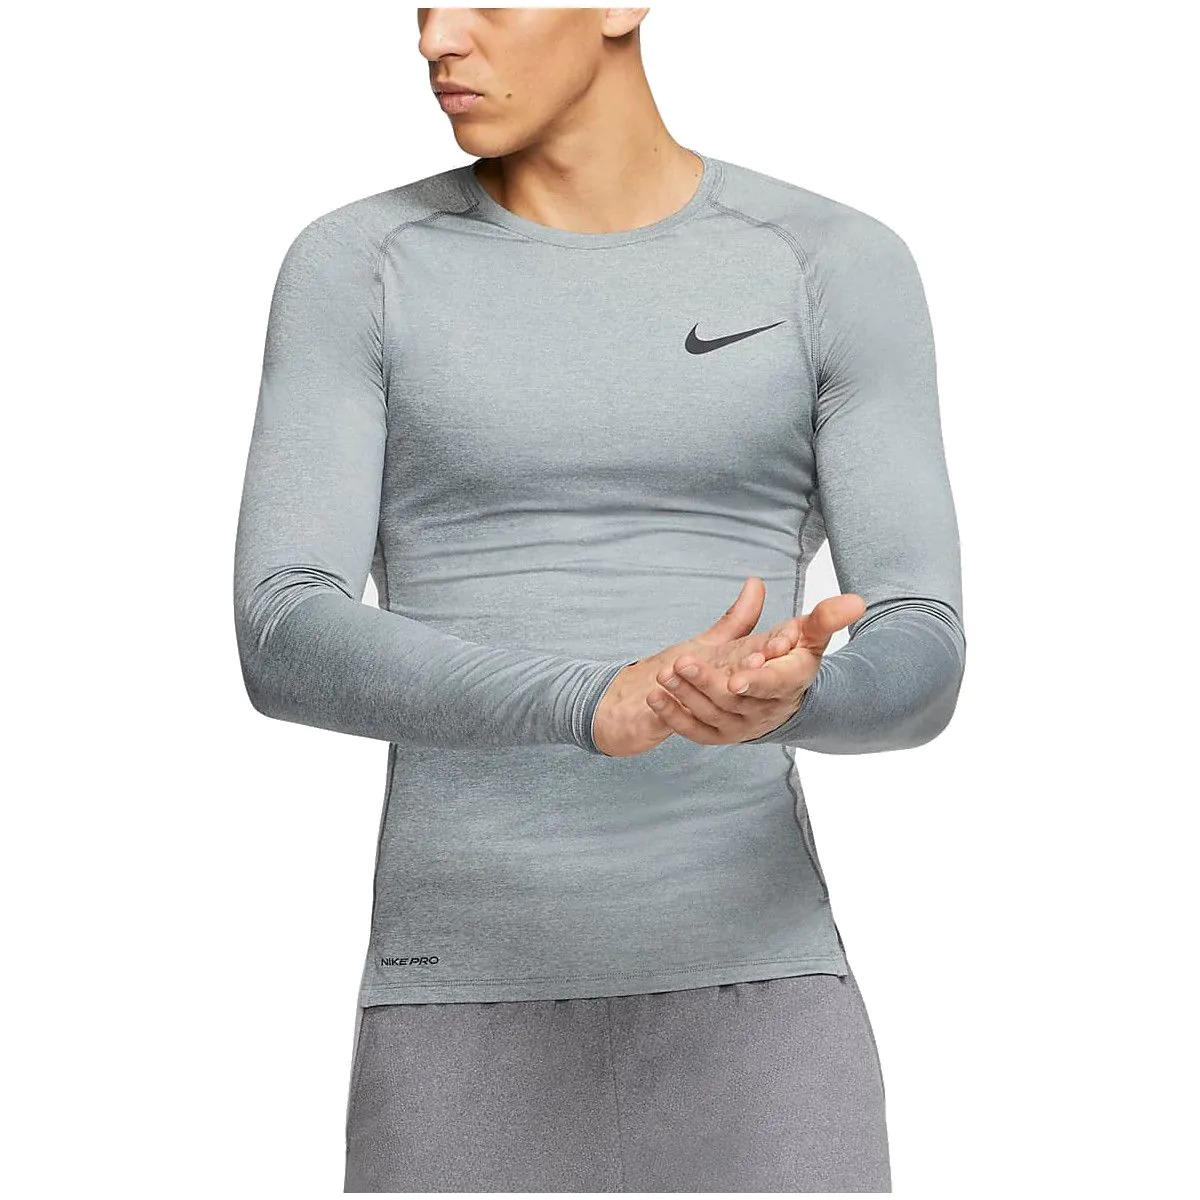 Nike Pro Men's Tight Fit Long-Sleeve Top BV5588-068